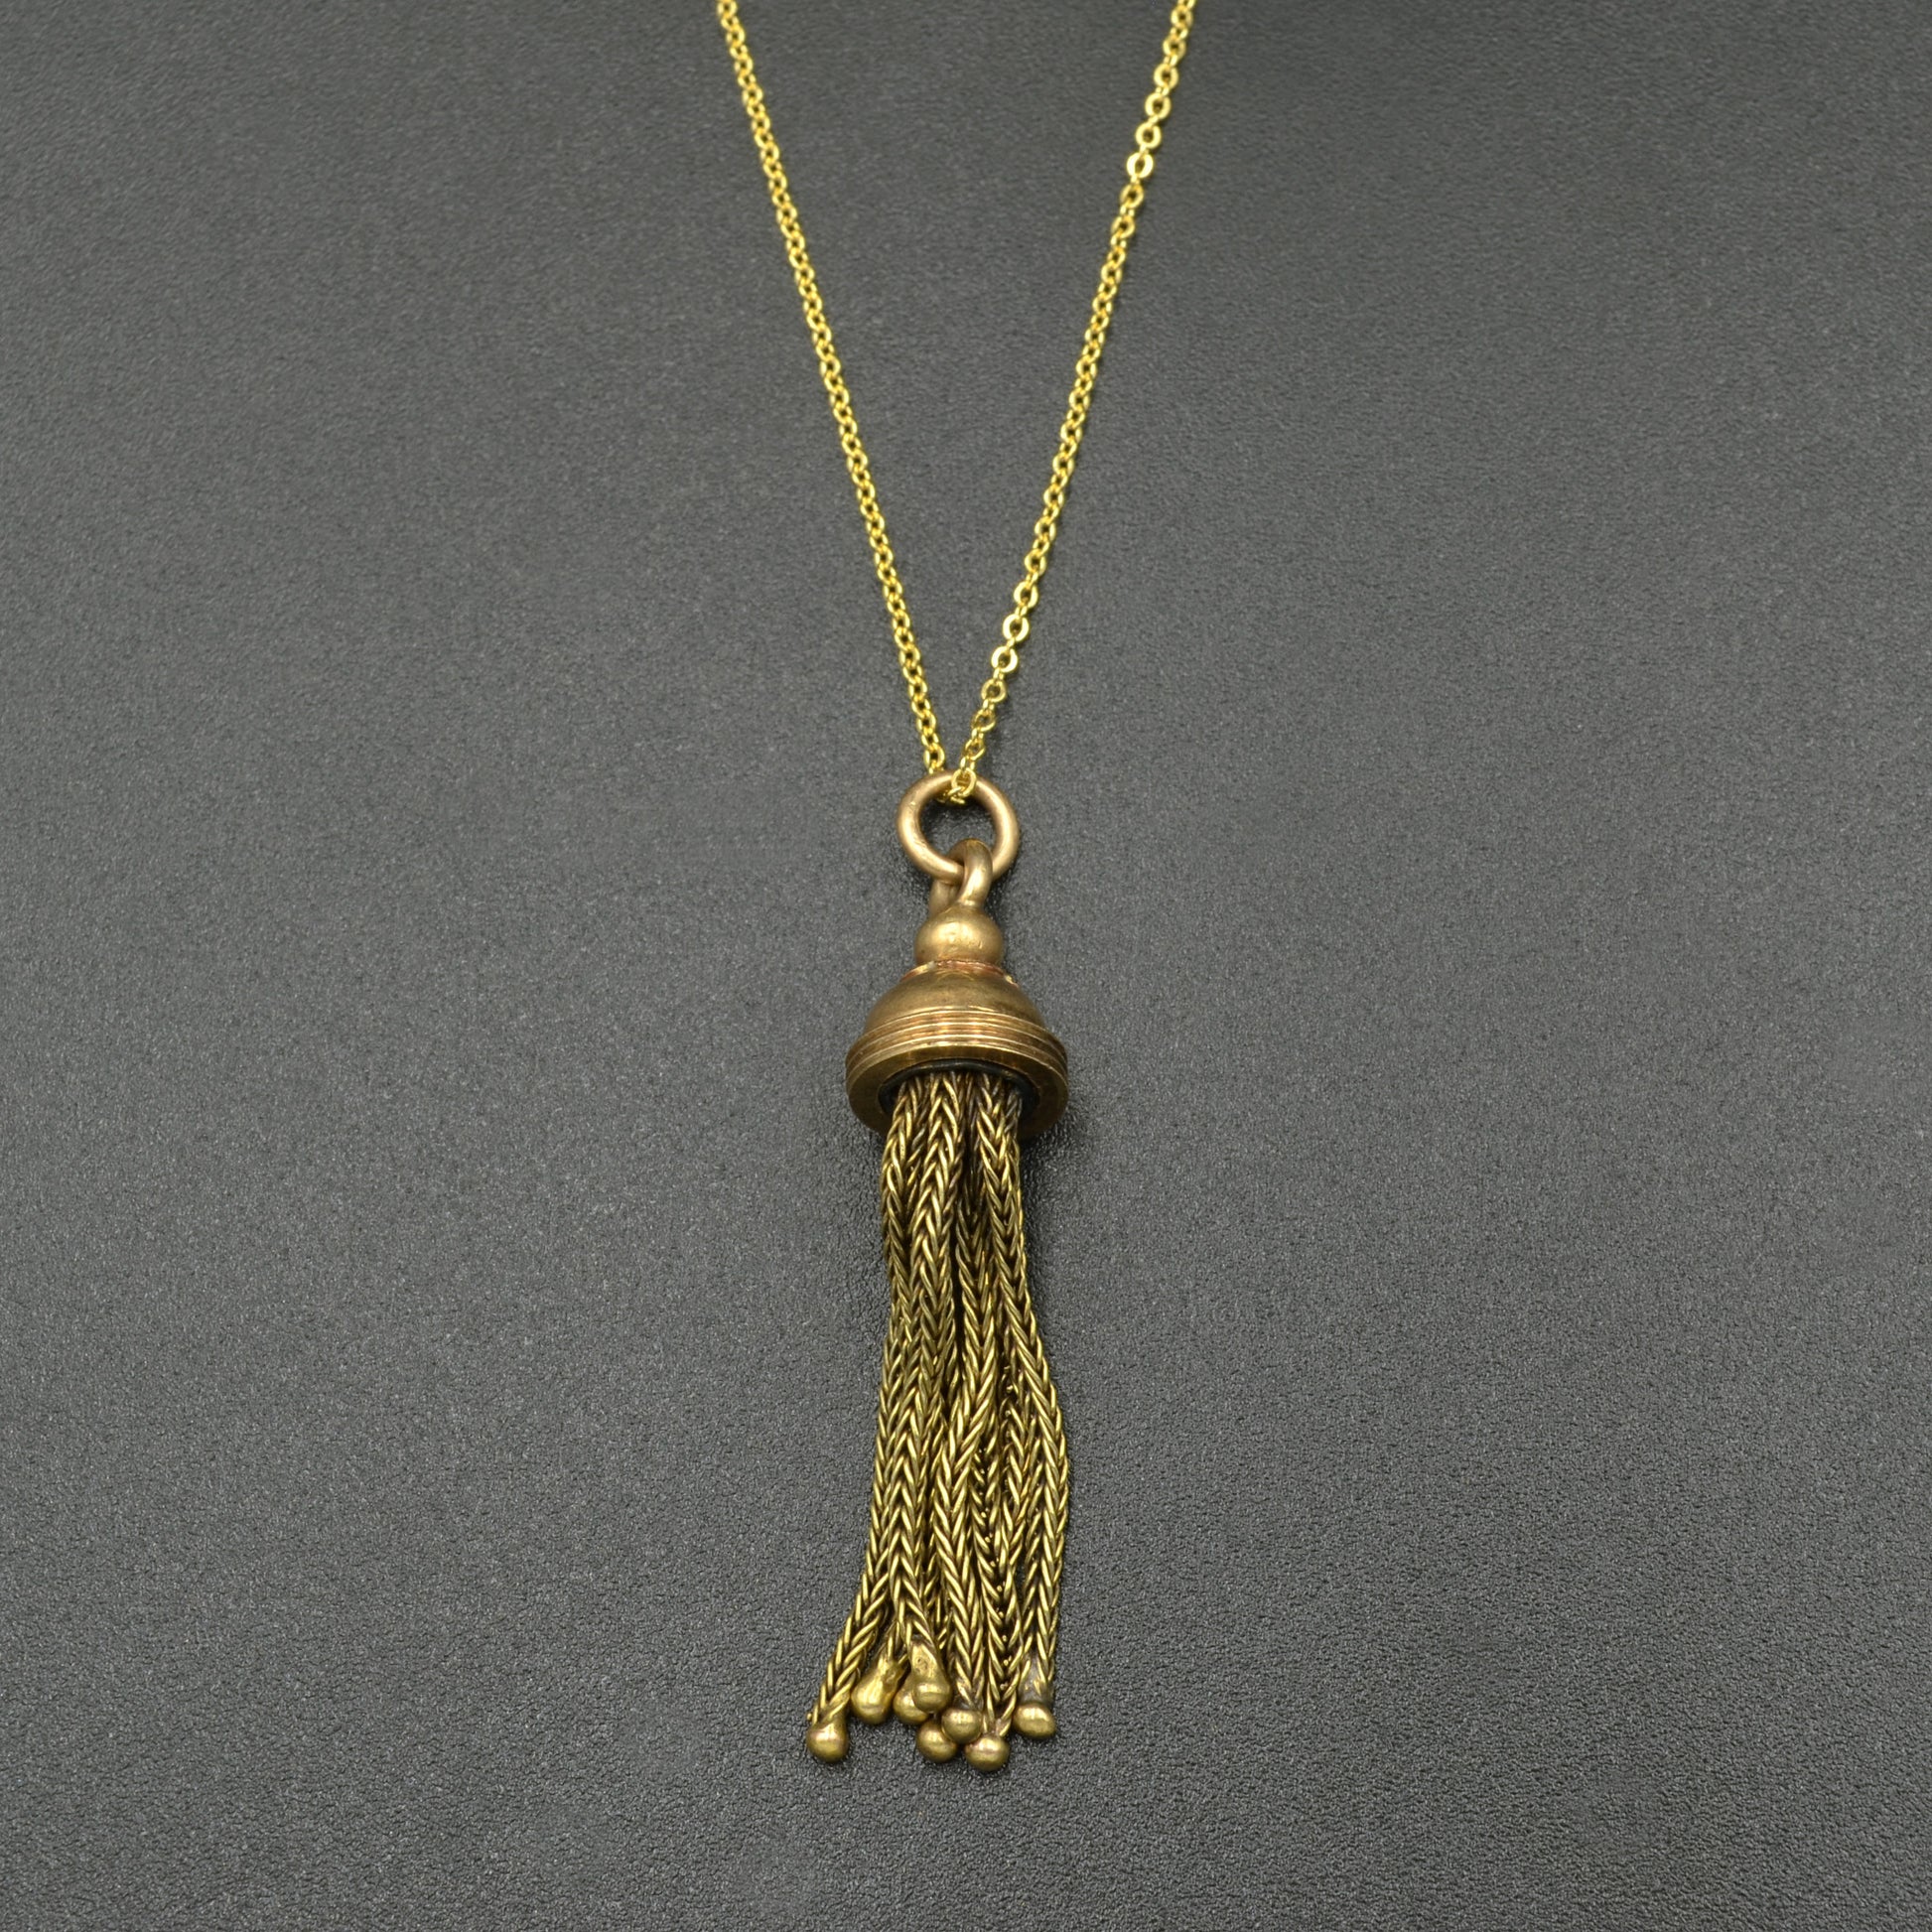 Antique Victorian Tassel Charm Necklace in 18k Gold